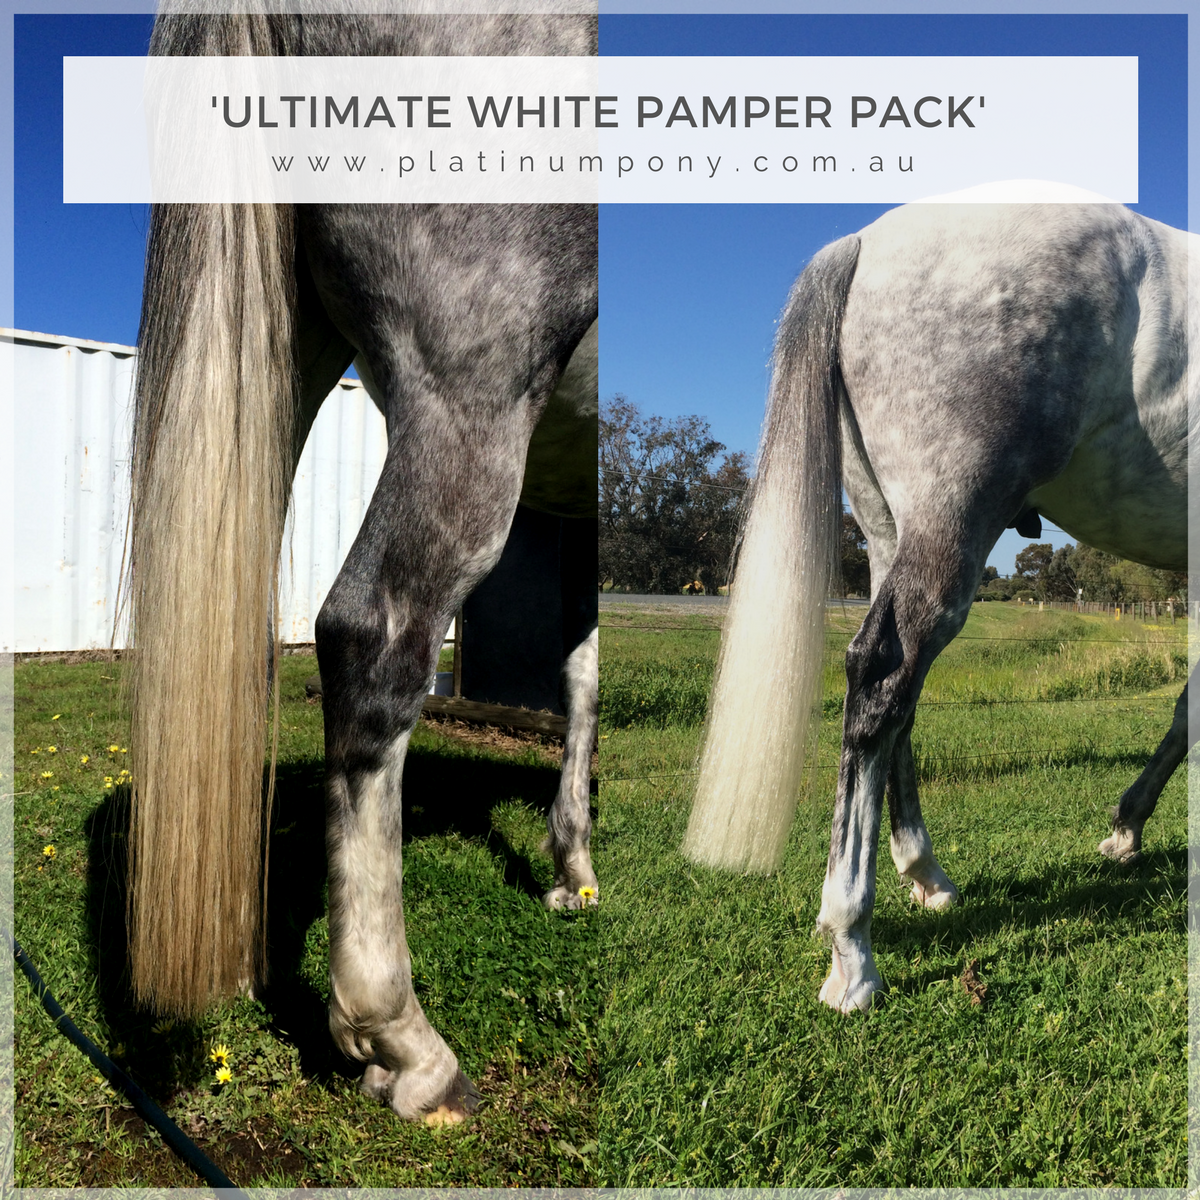 Platinum Pony - Ultimate White Pamper Pack